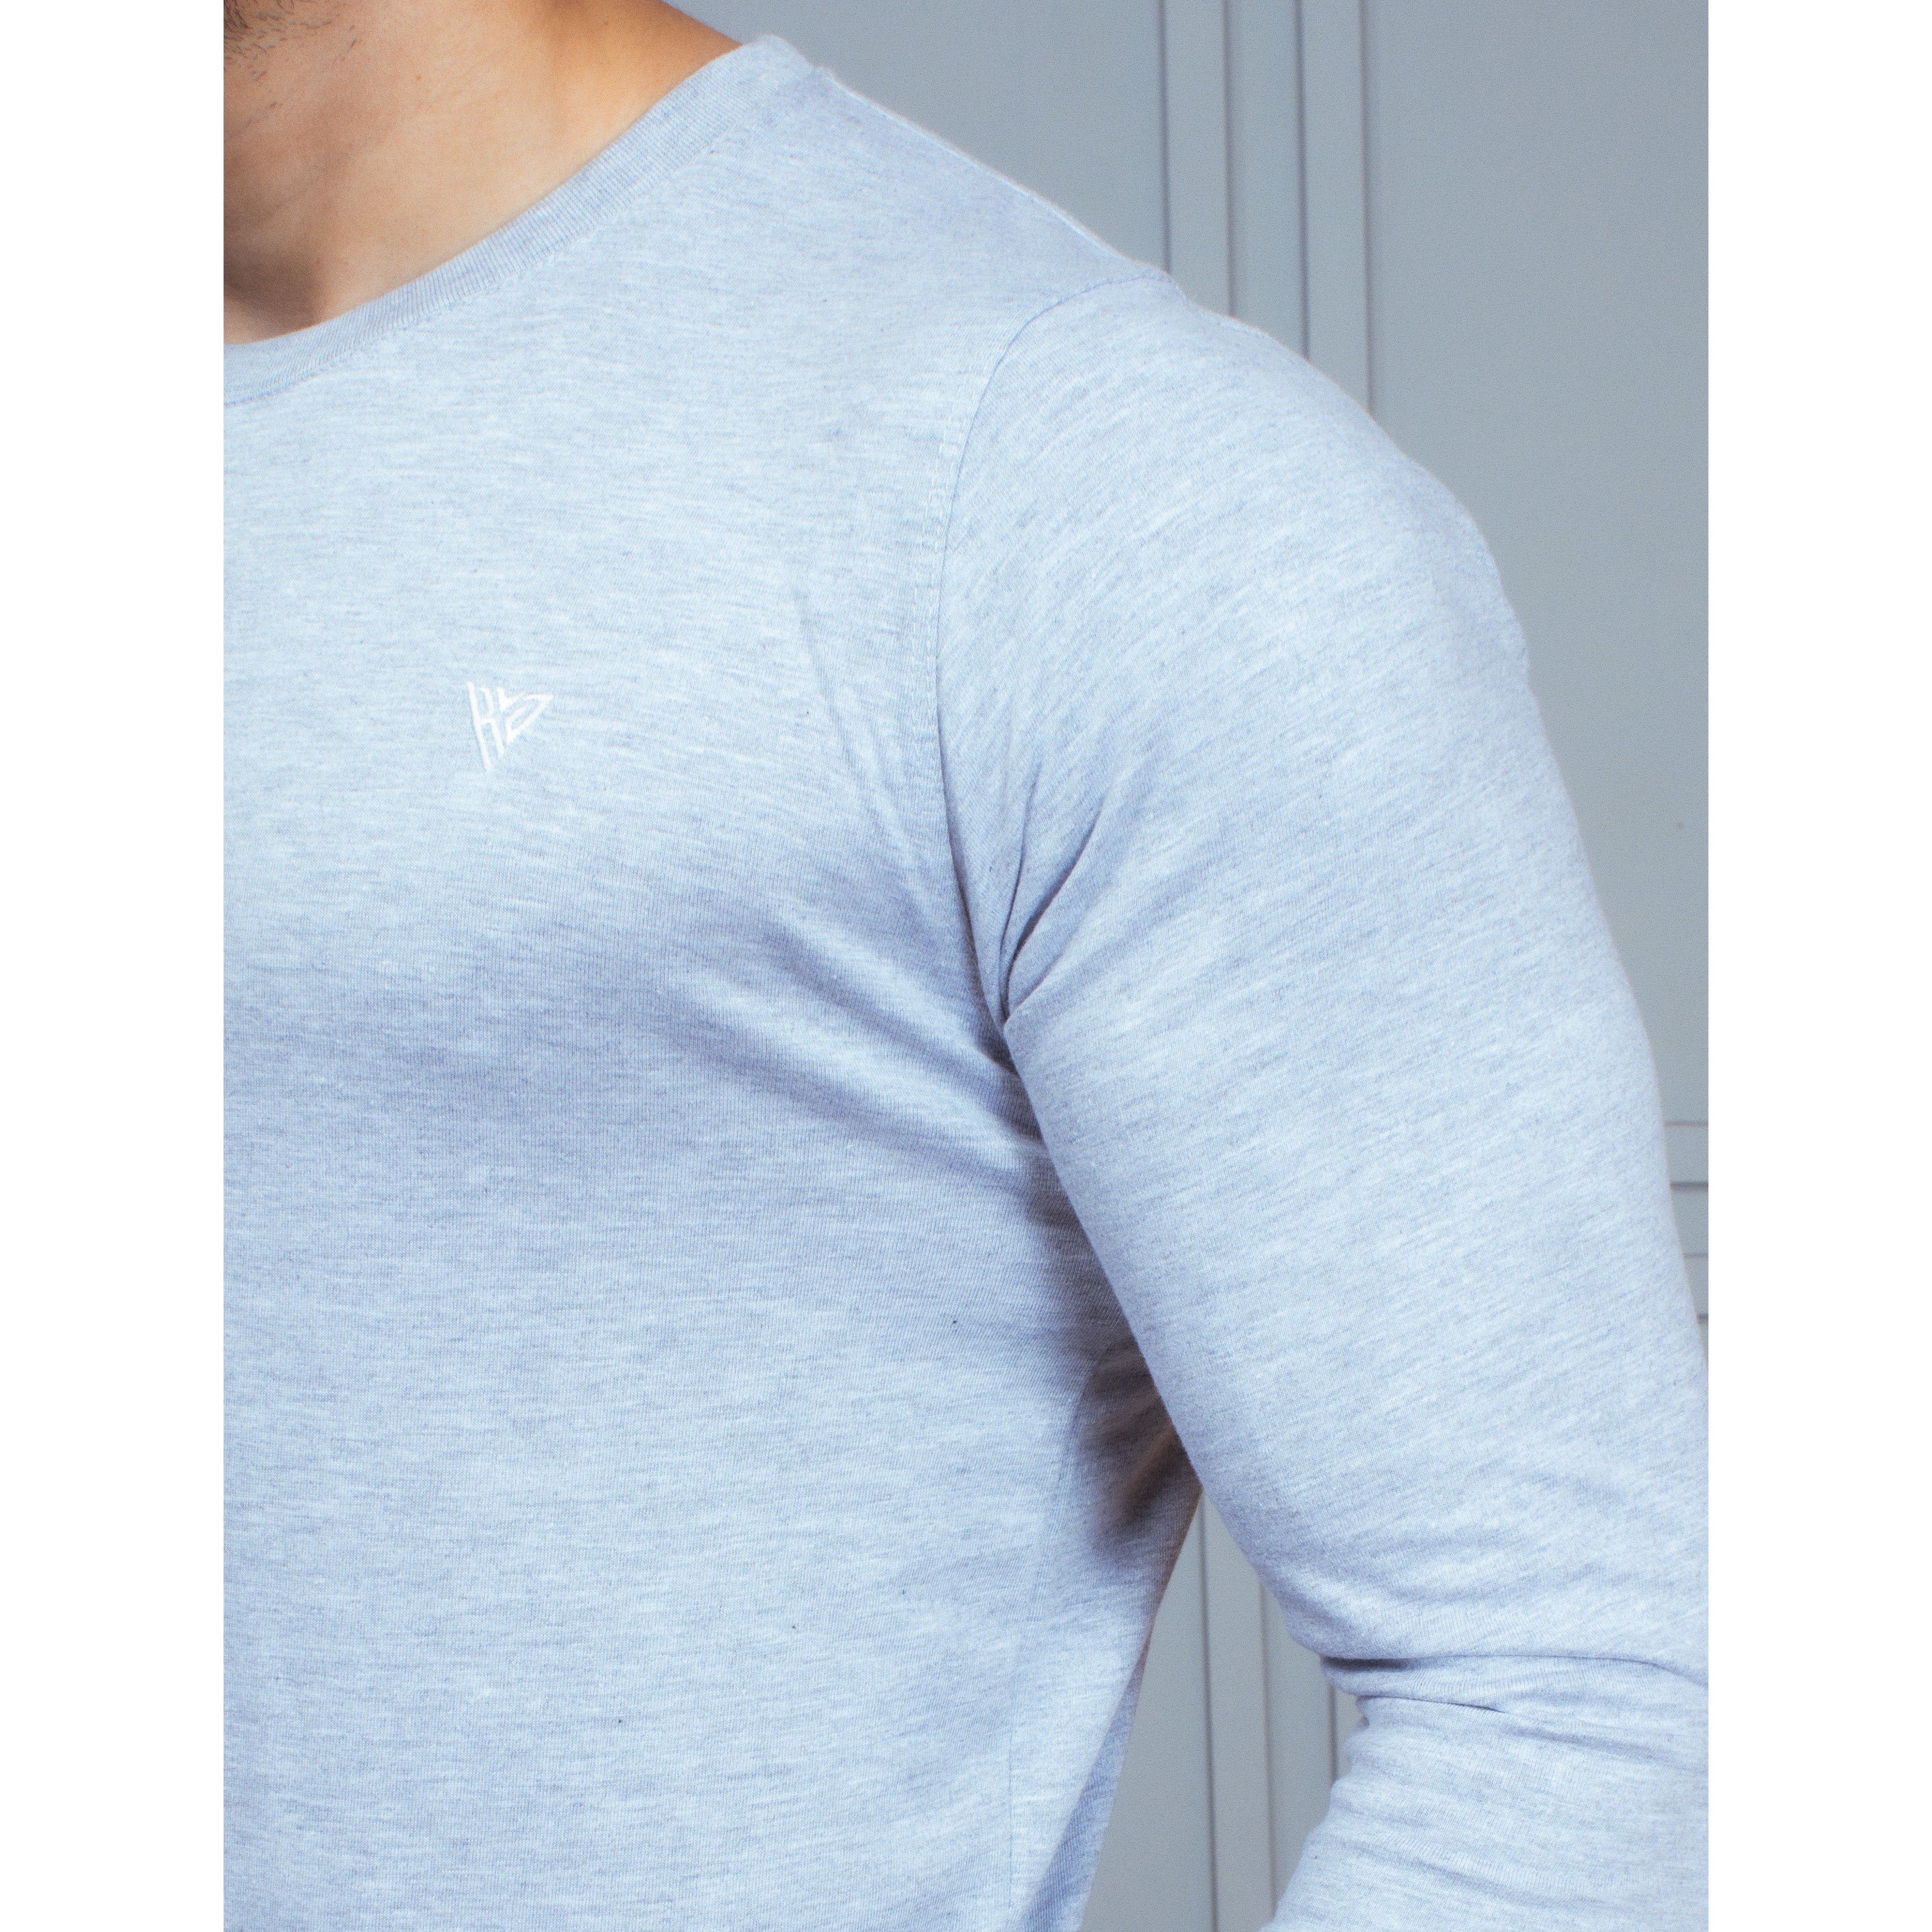 Men's full Sleeve Round Neck T-Shirt H grey